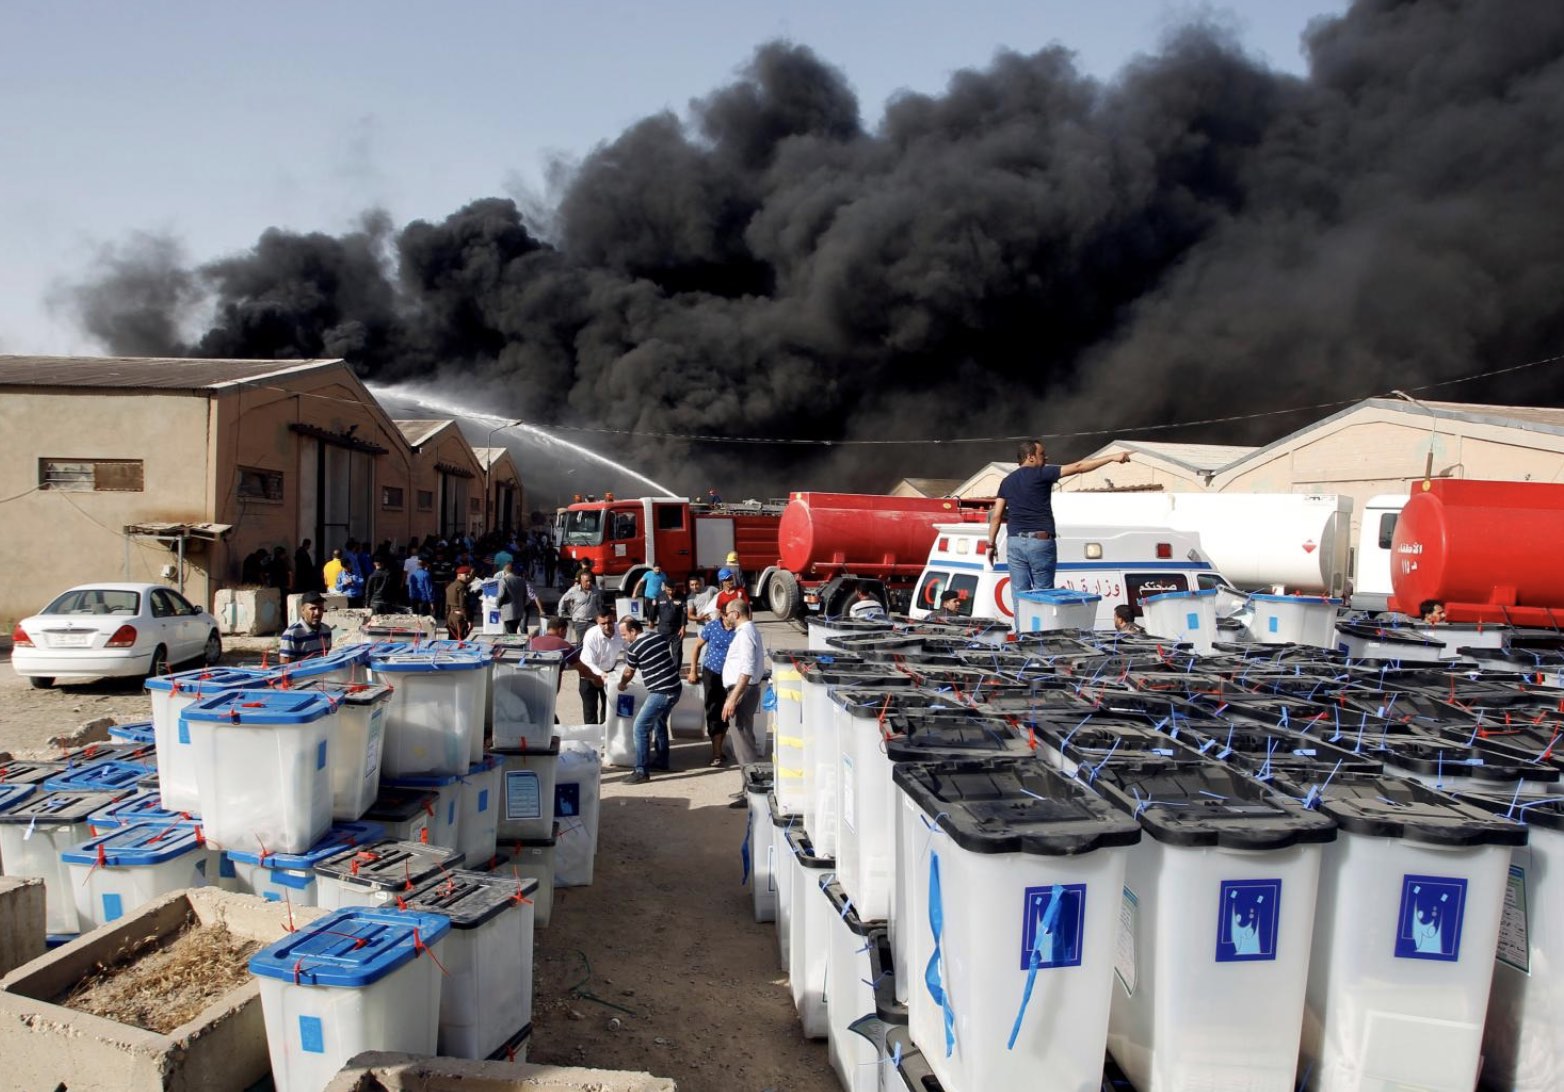 After Ballot Box Fire, Cleric Sadr Says Iraqis Should Unite